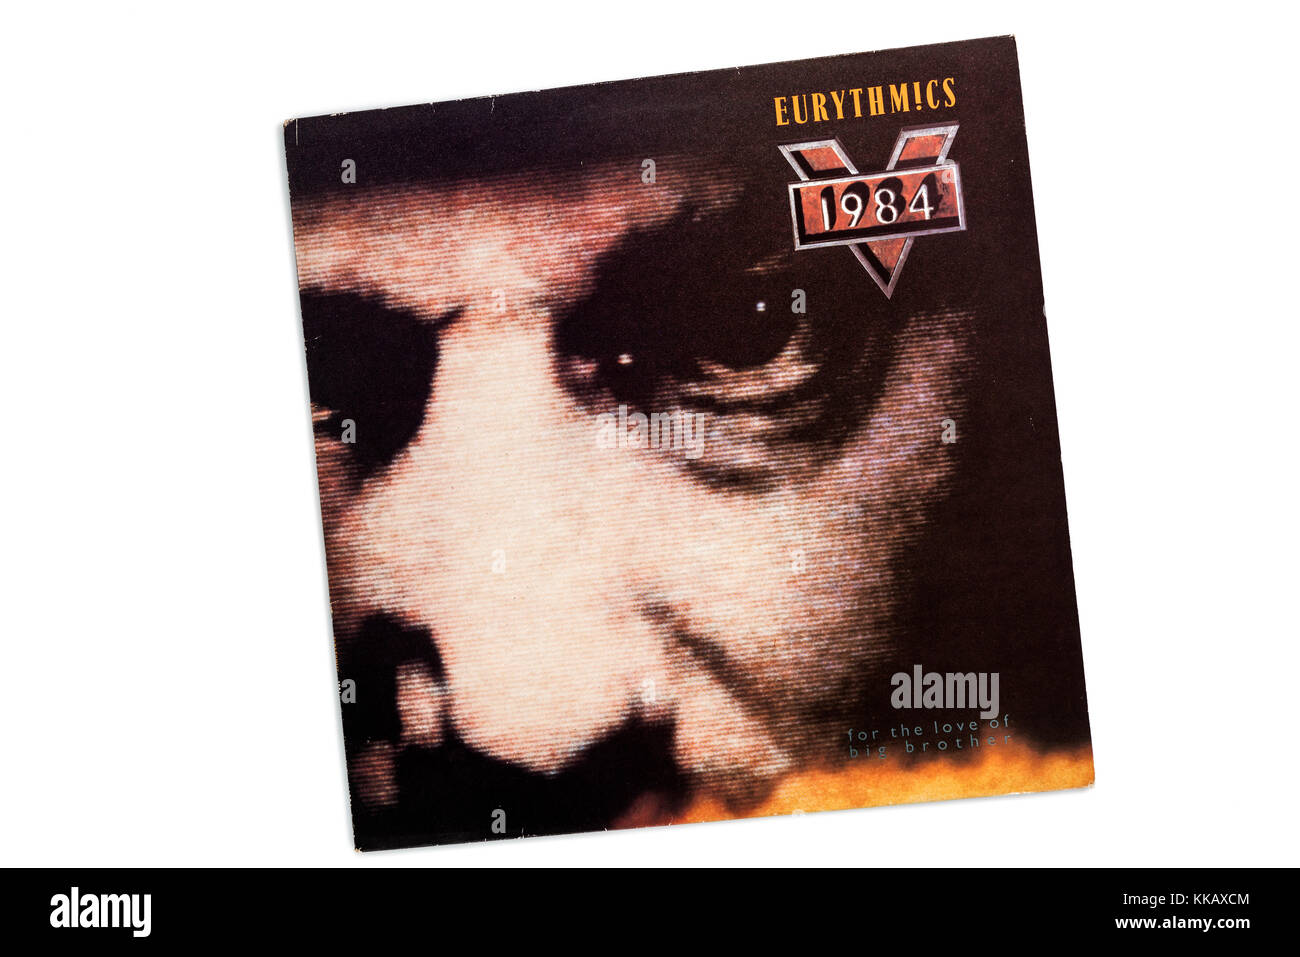 Eurythmics, 1984,Album cover. Stock Photo